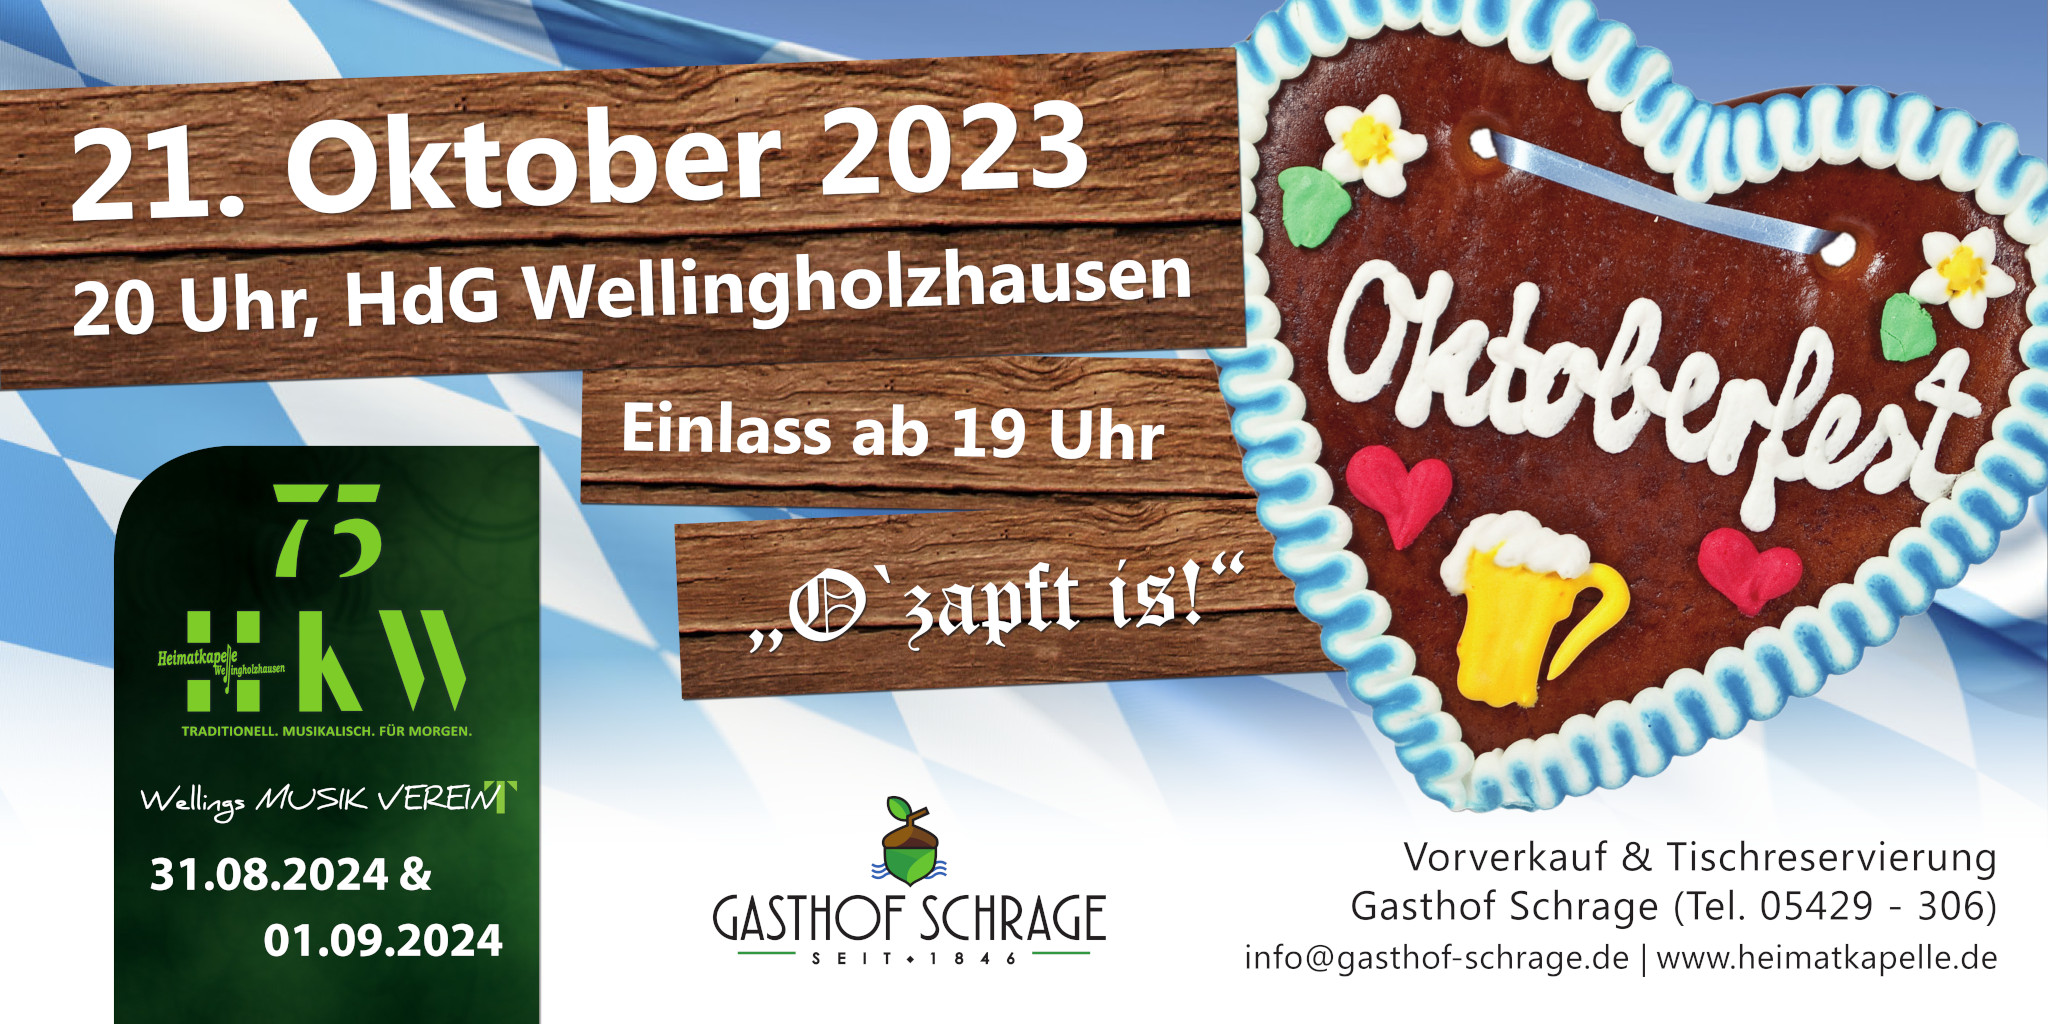 Save the Date: Oktoberfest 2023